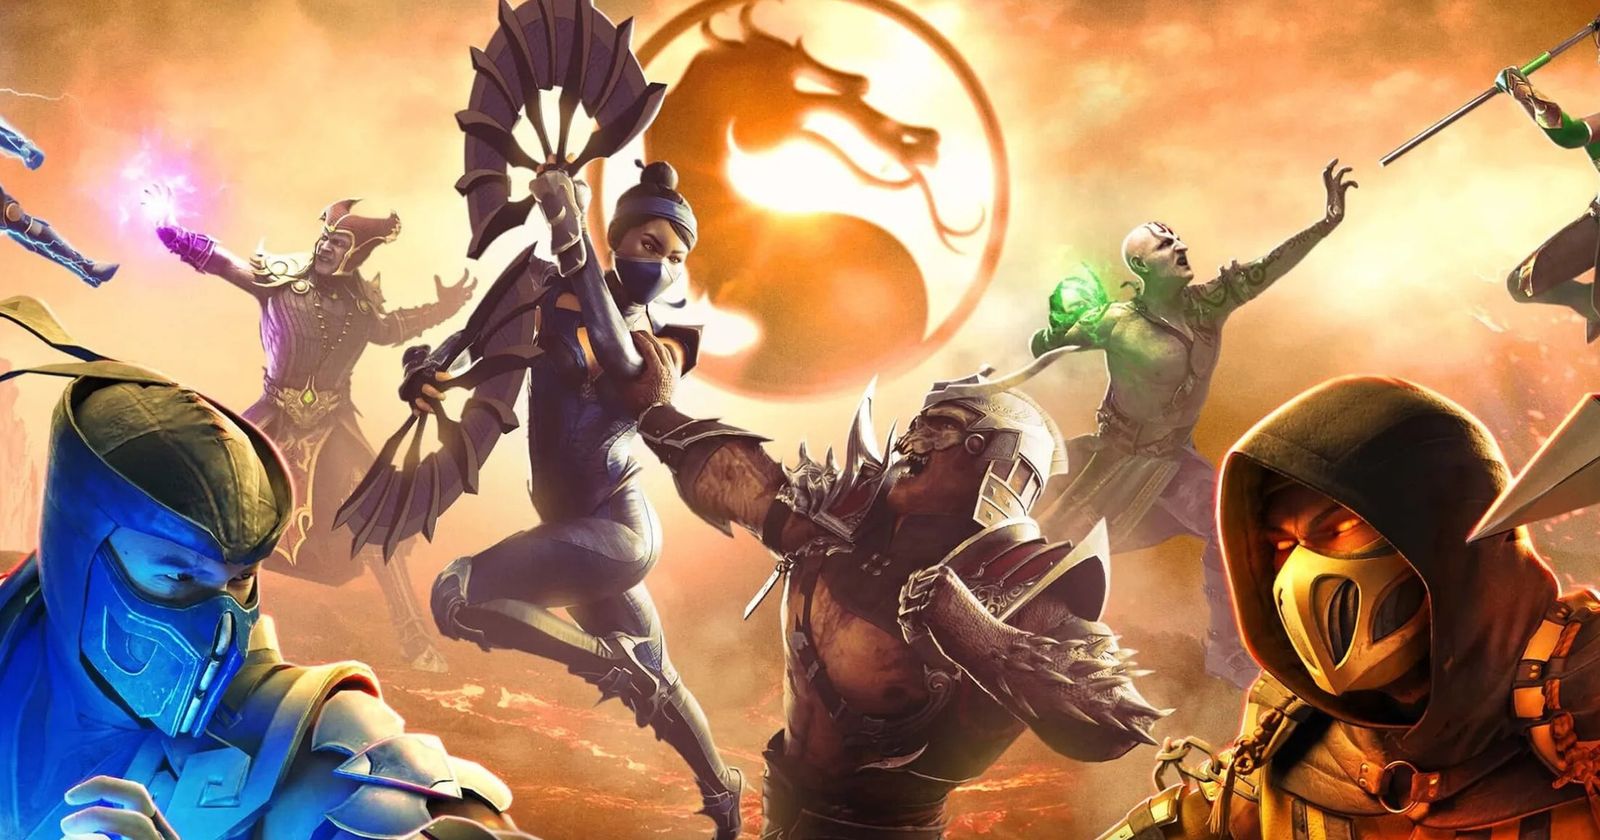 Download Mortal Kombat: Onslaught on PC with MEmu